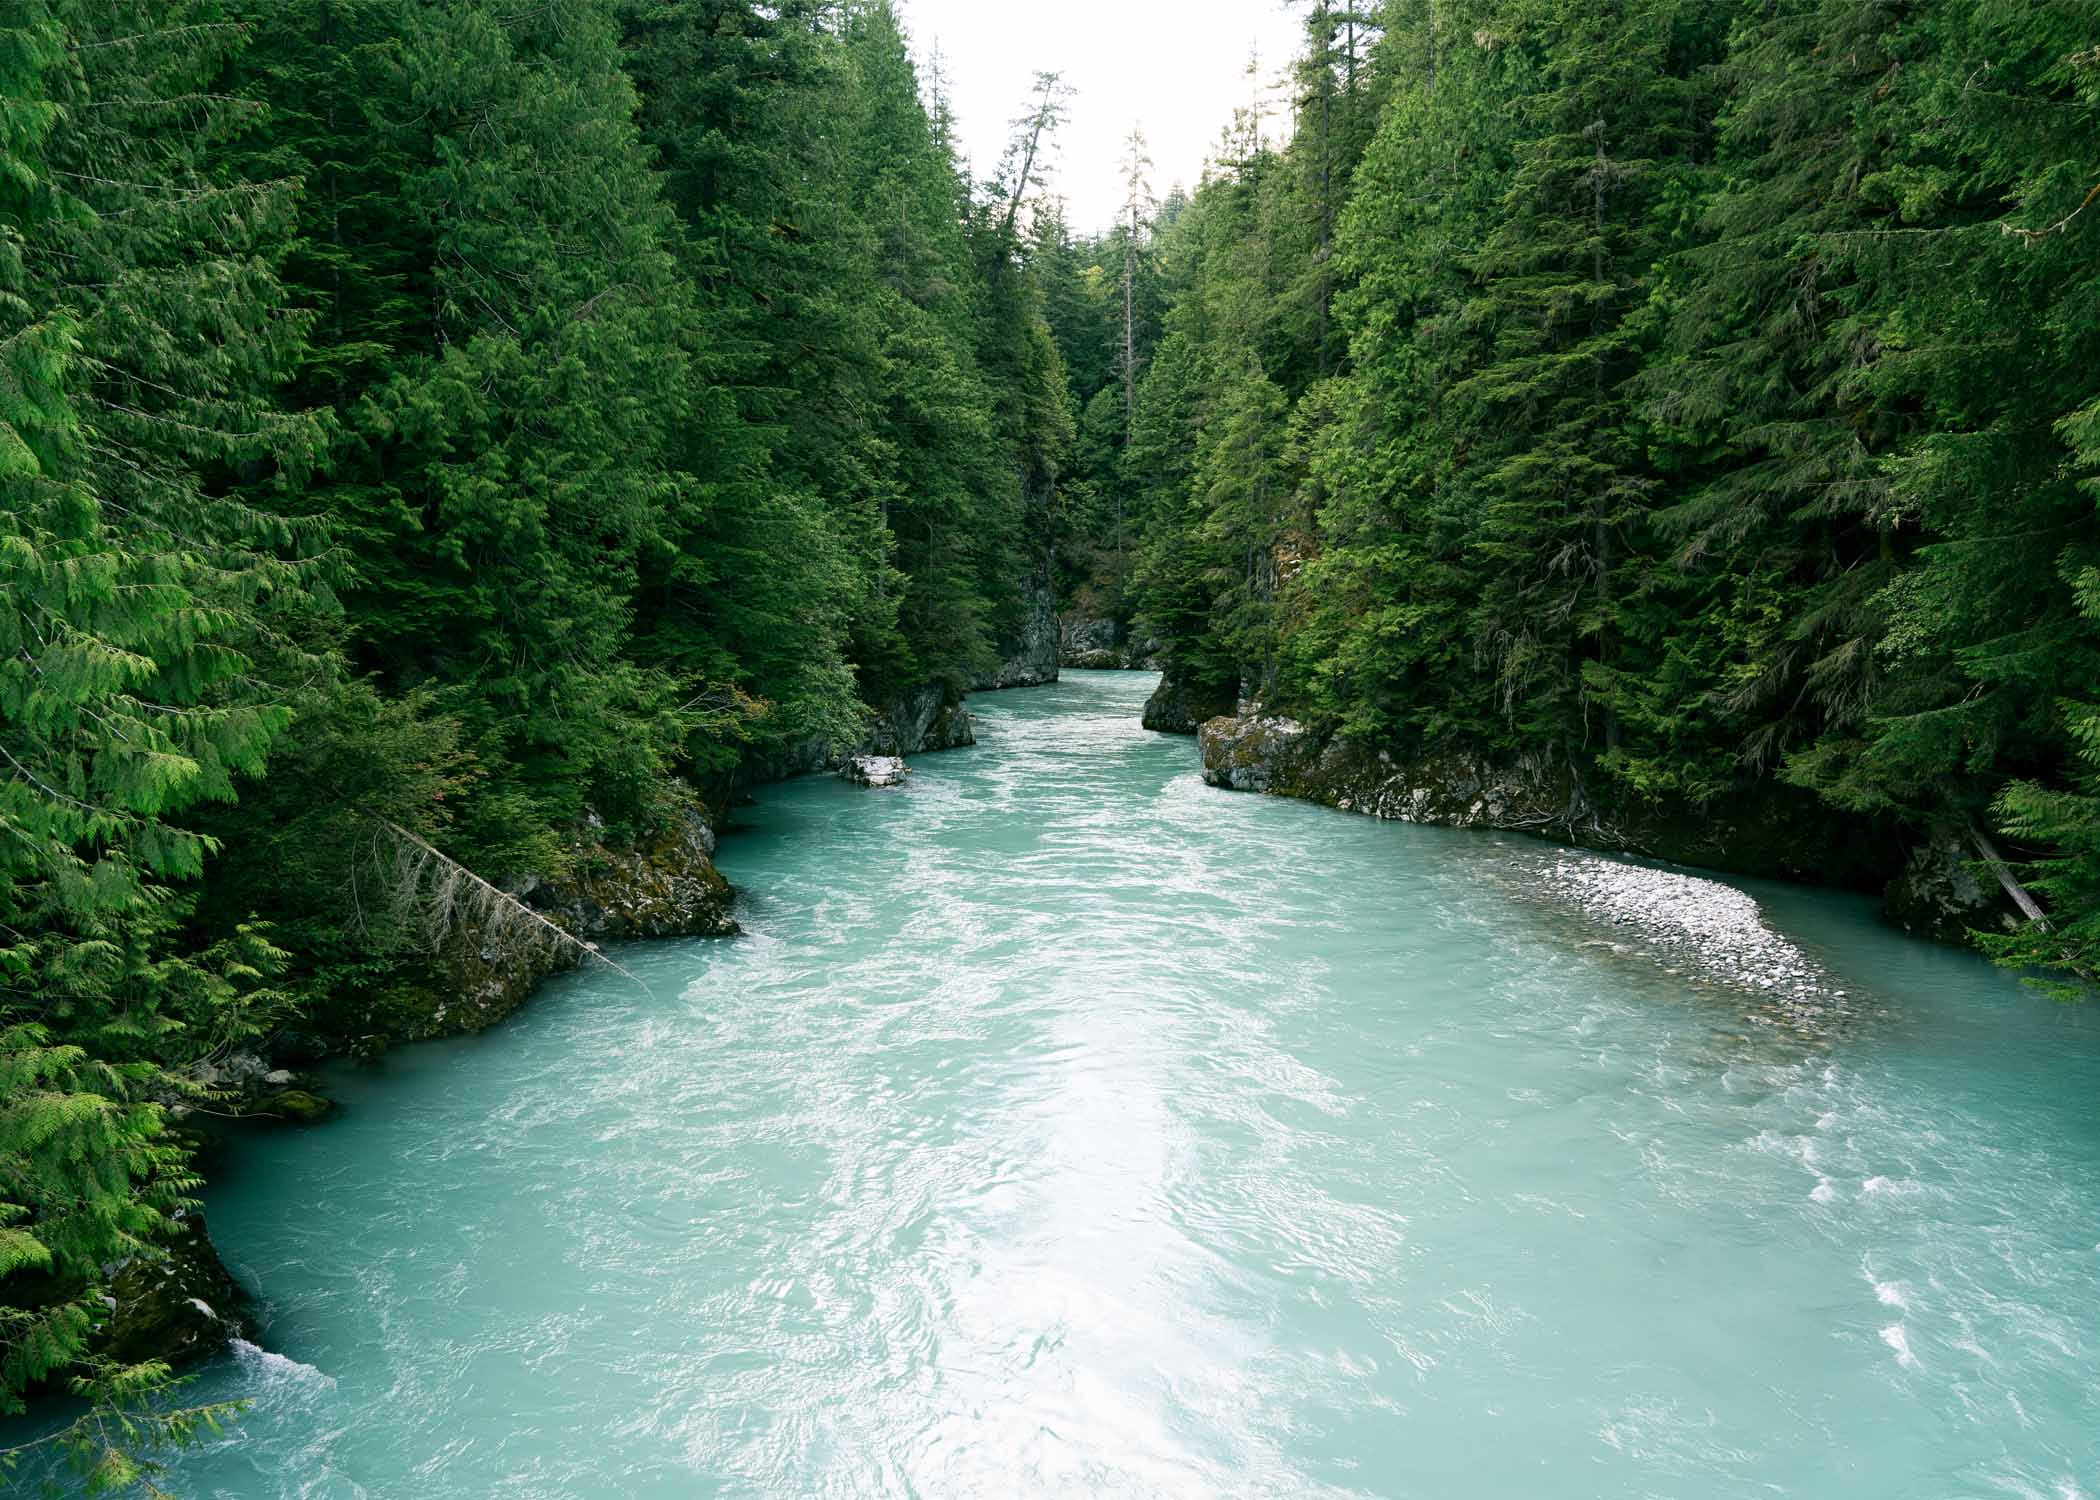 Blue river flowing down stream alongside large green trees 